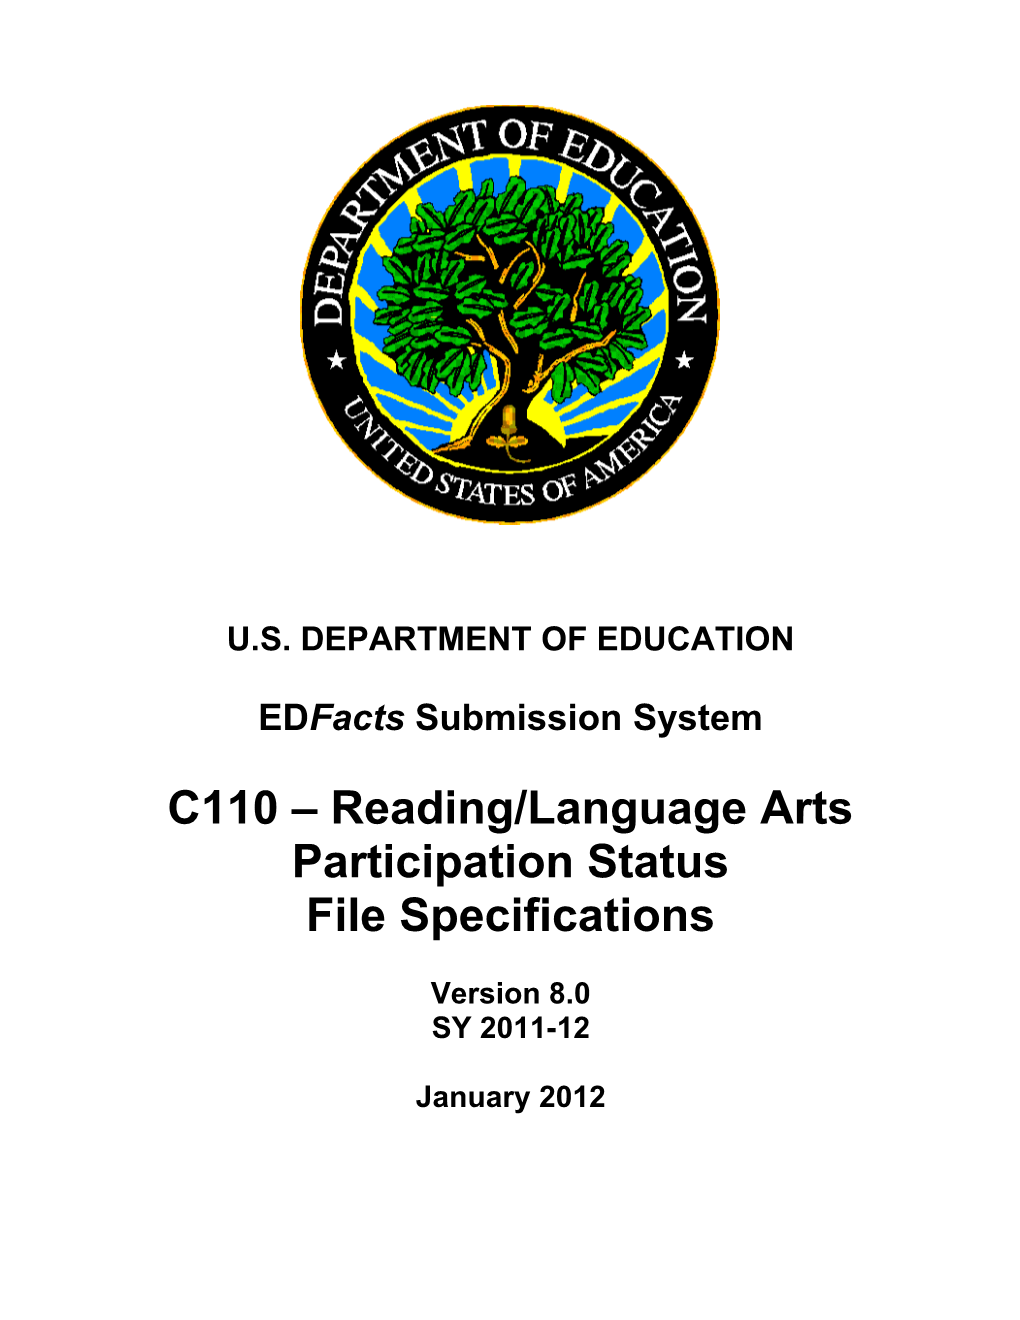 Reading/Language Arts Participation Status File Specifications